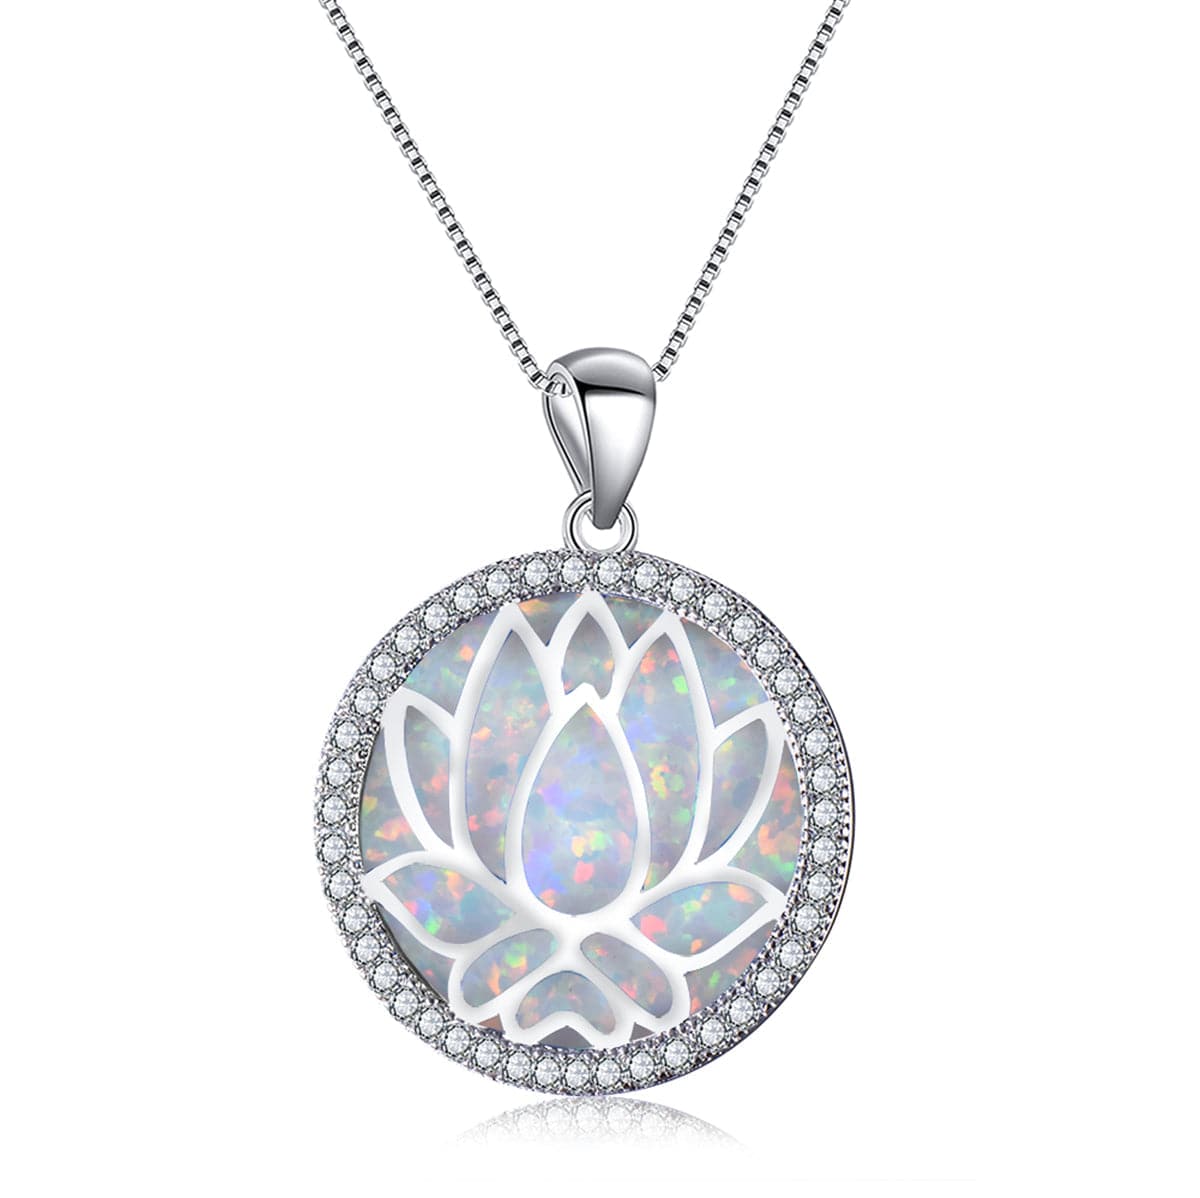 Opal & Cubic Zirconia Round Lotus Pendant Necklace